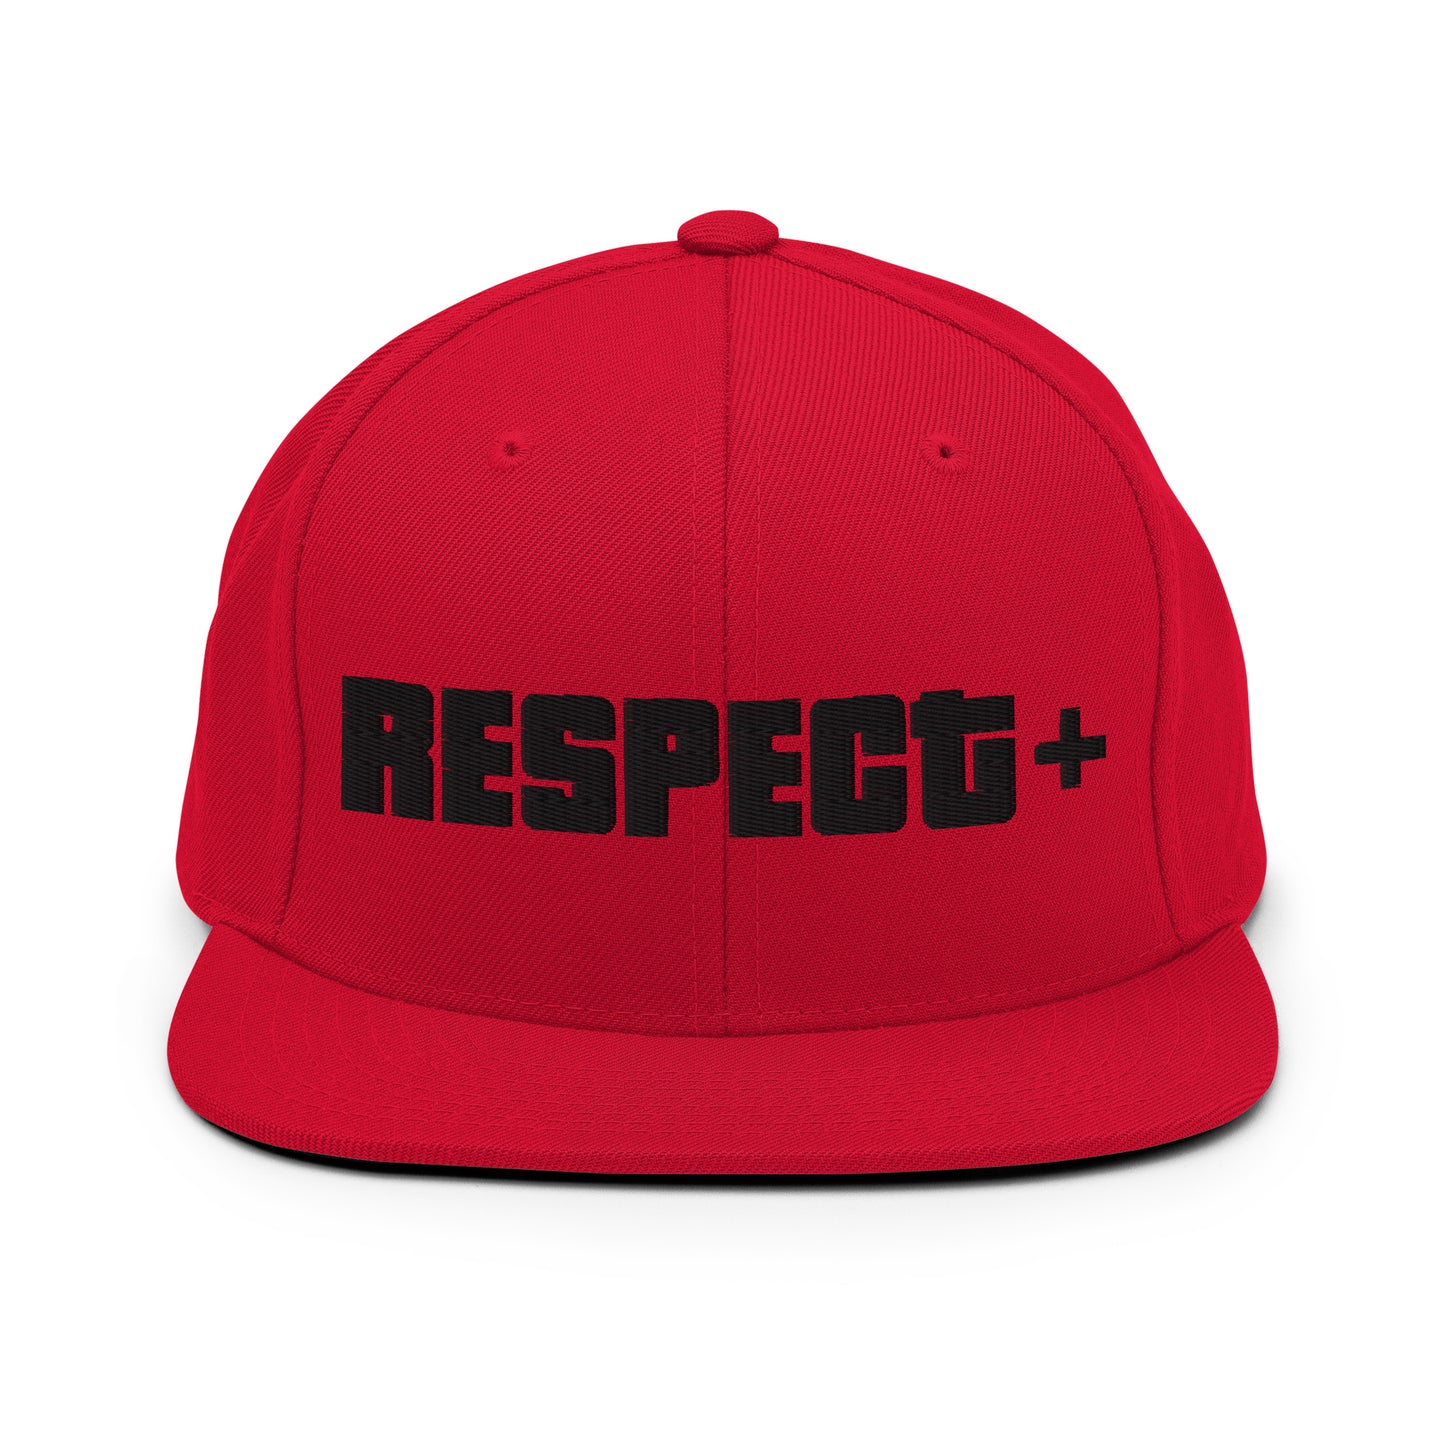 Respect + snapback hat